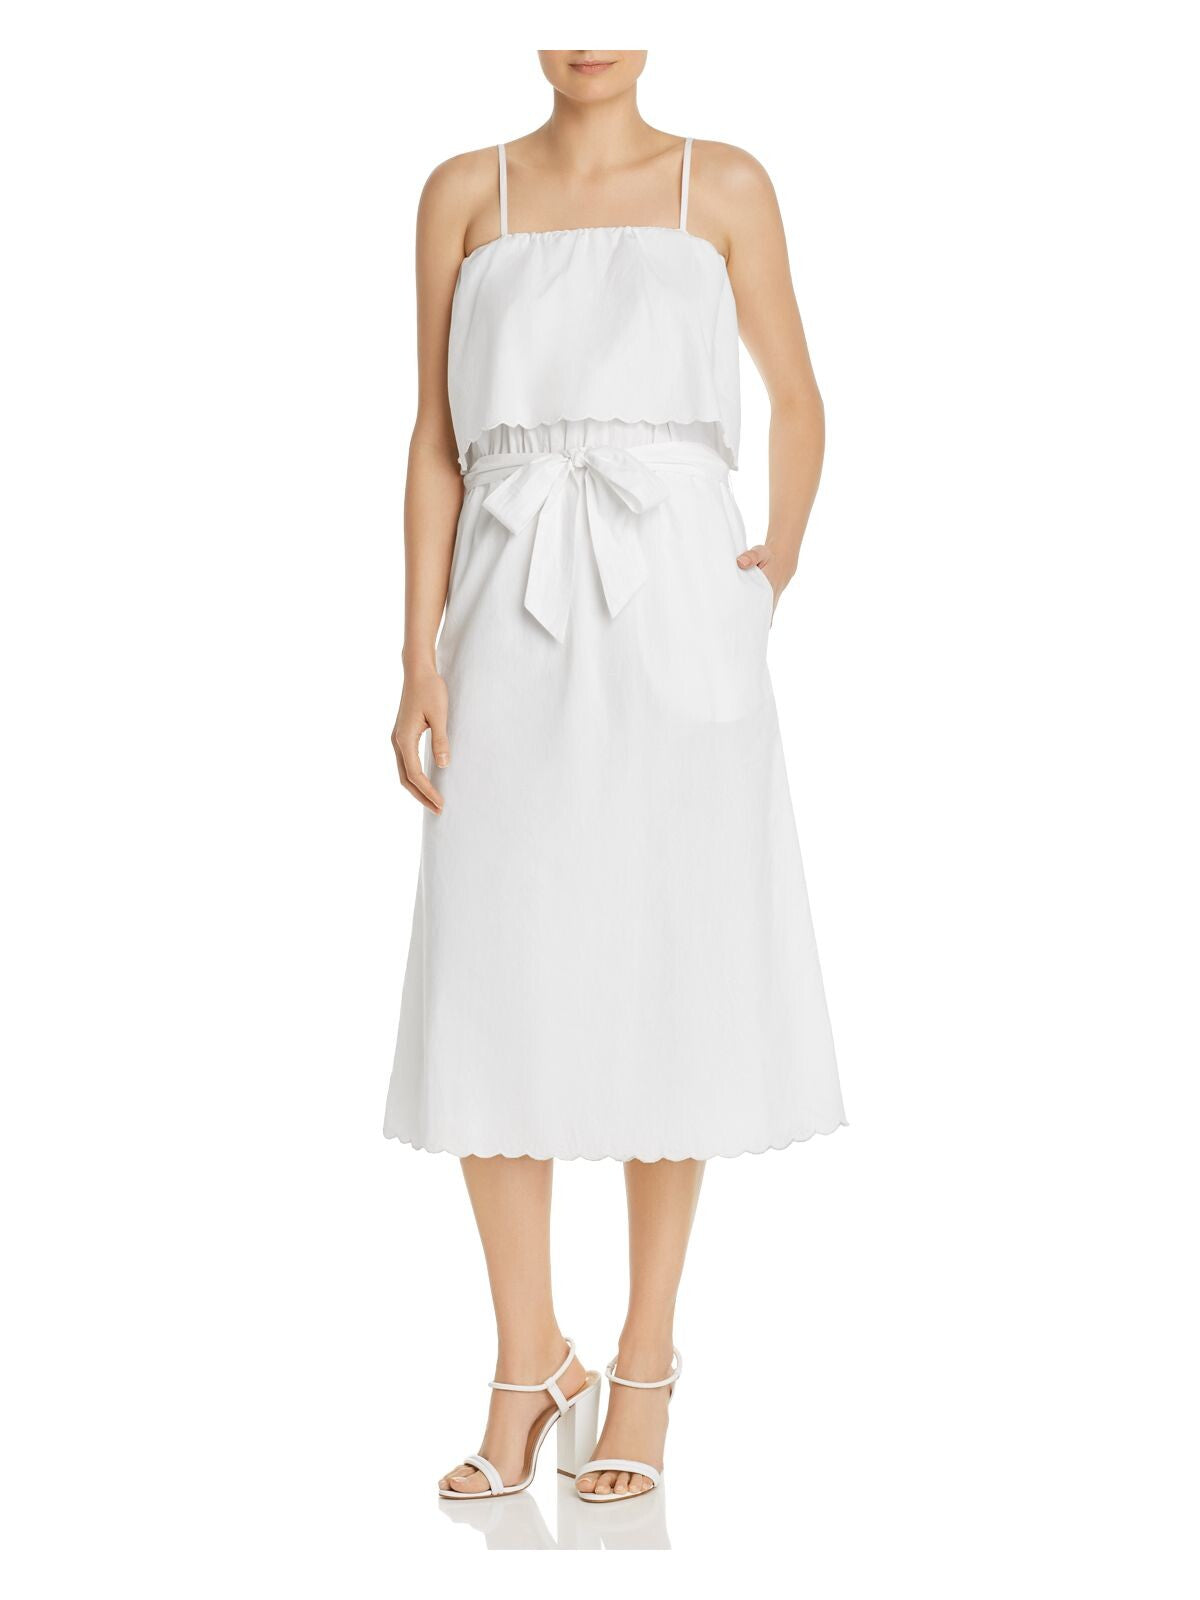 JOIE Womens White Cotton Ruffled Tie Front Scalloped Spaghetti Strap Midi Blouson Dress S